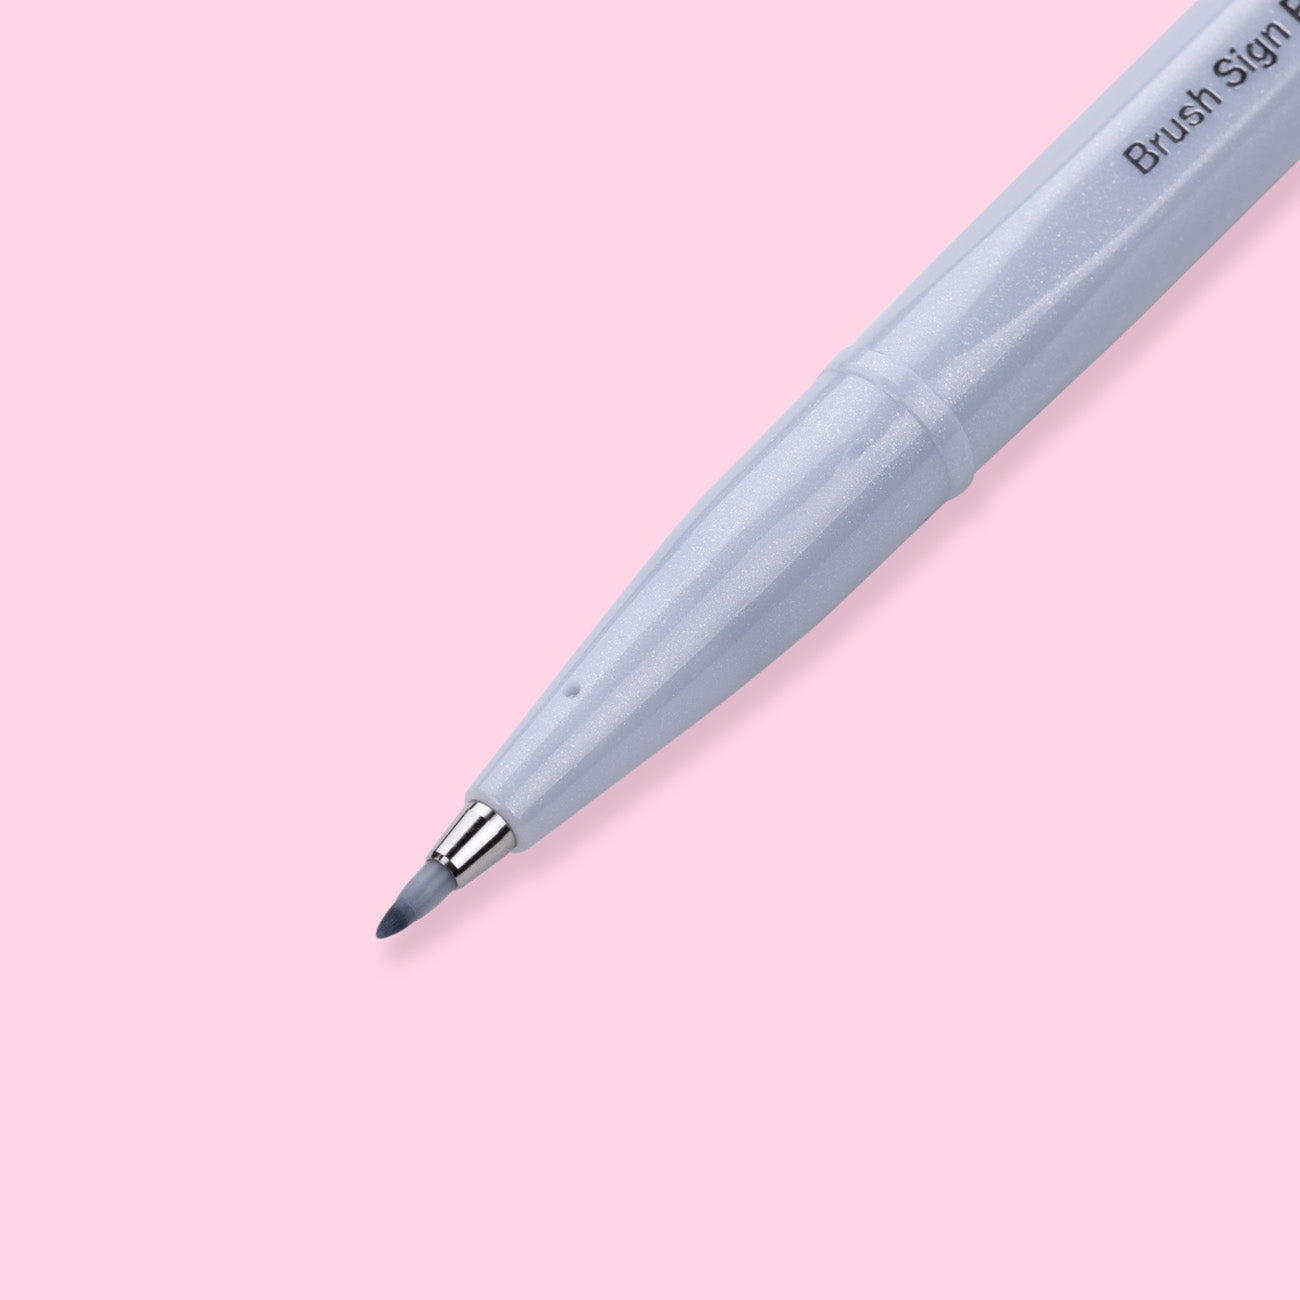 PENTEL Brush Pen Brush Touch Sign Pen 18 Colors Set